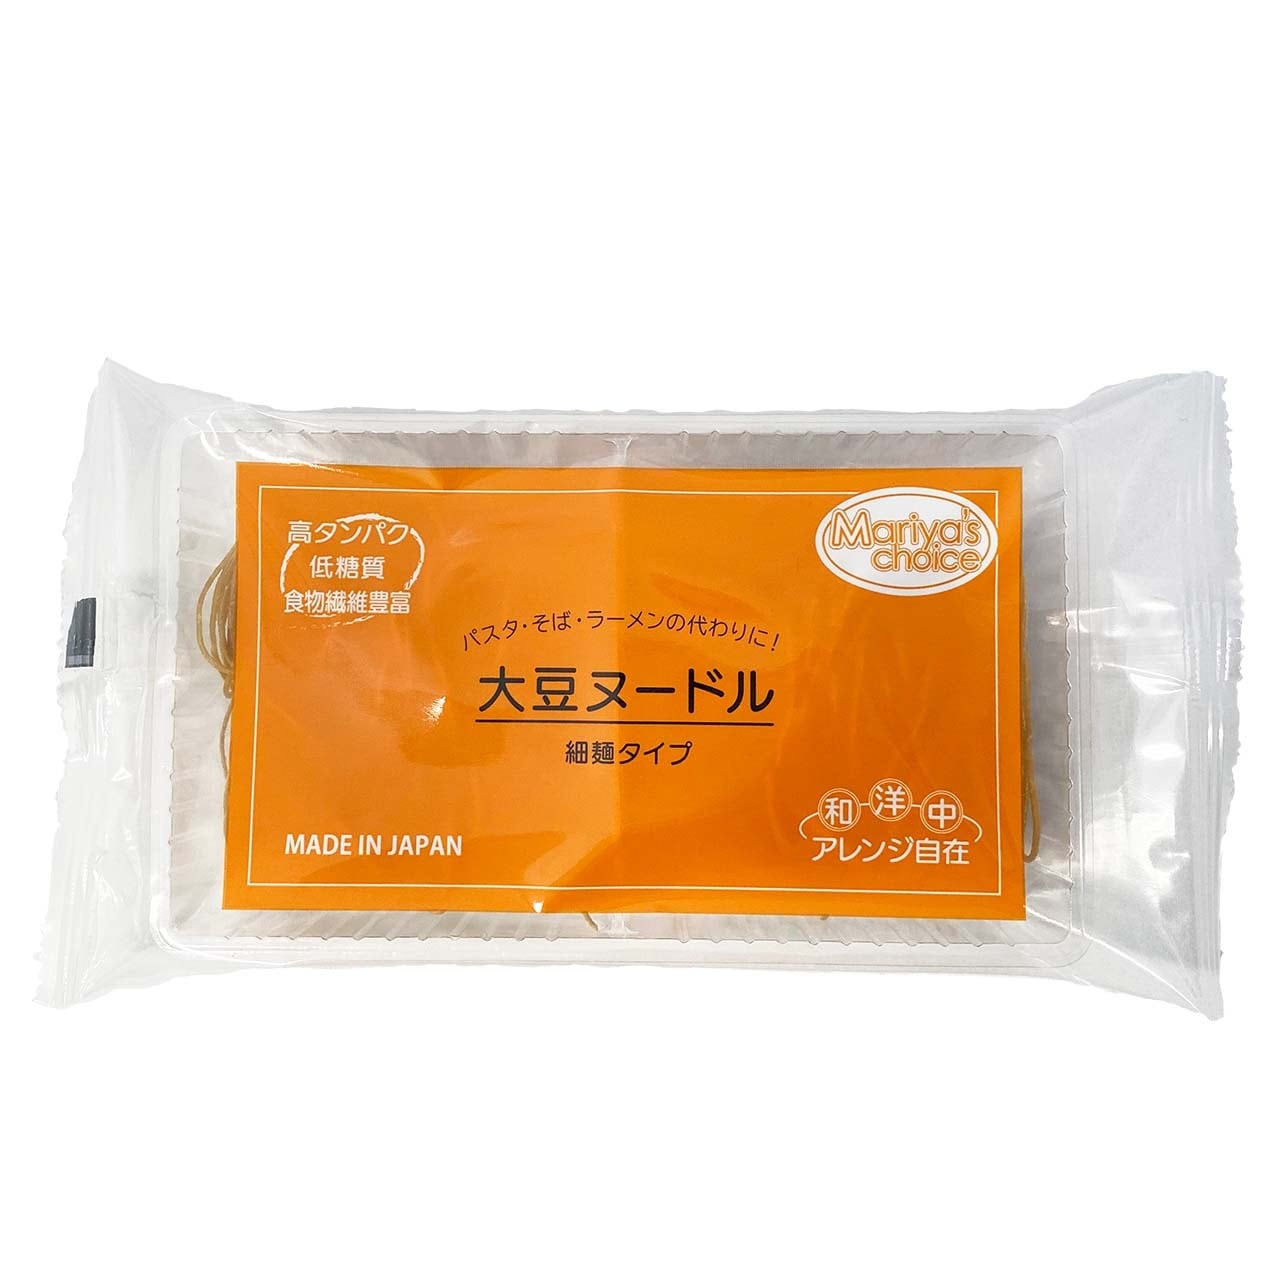 Mariya's Choice  北海道産大豆ヌードル[乾麺]  7袋(14食分)セット